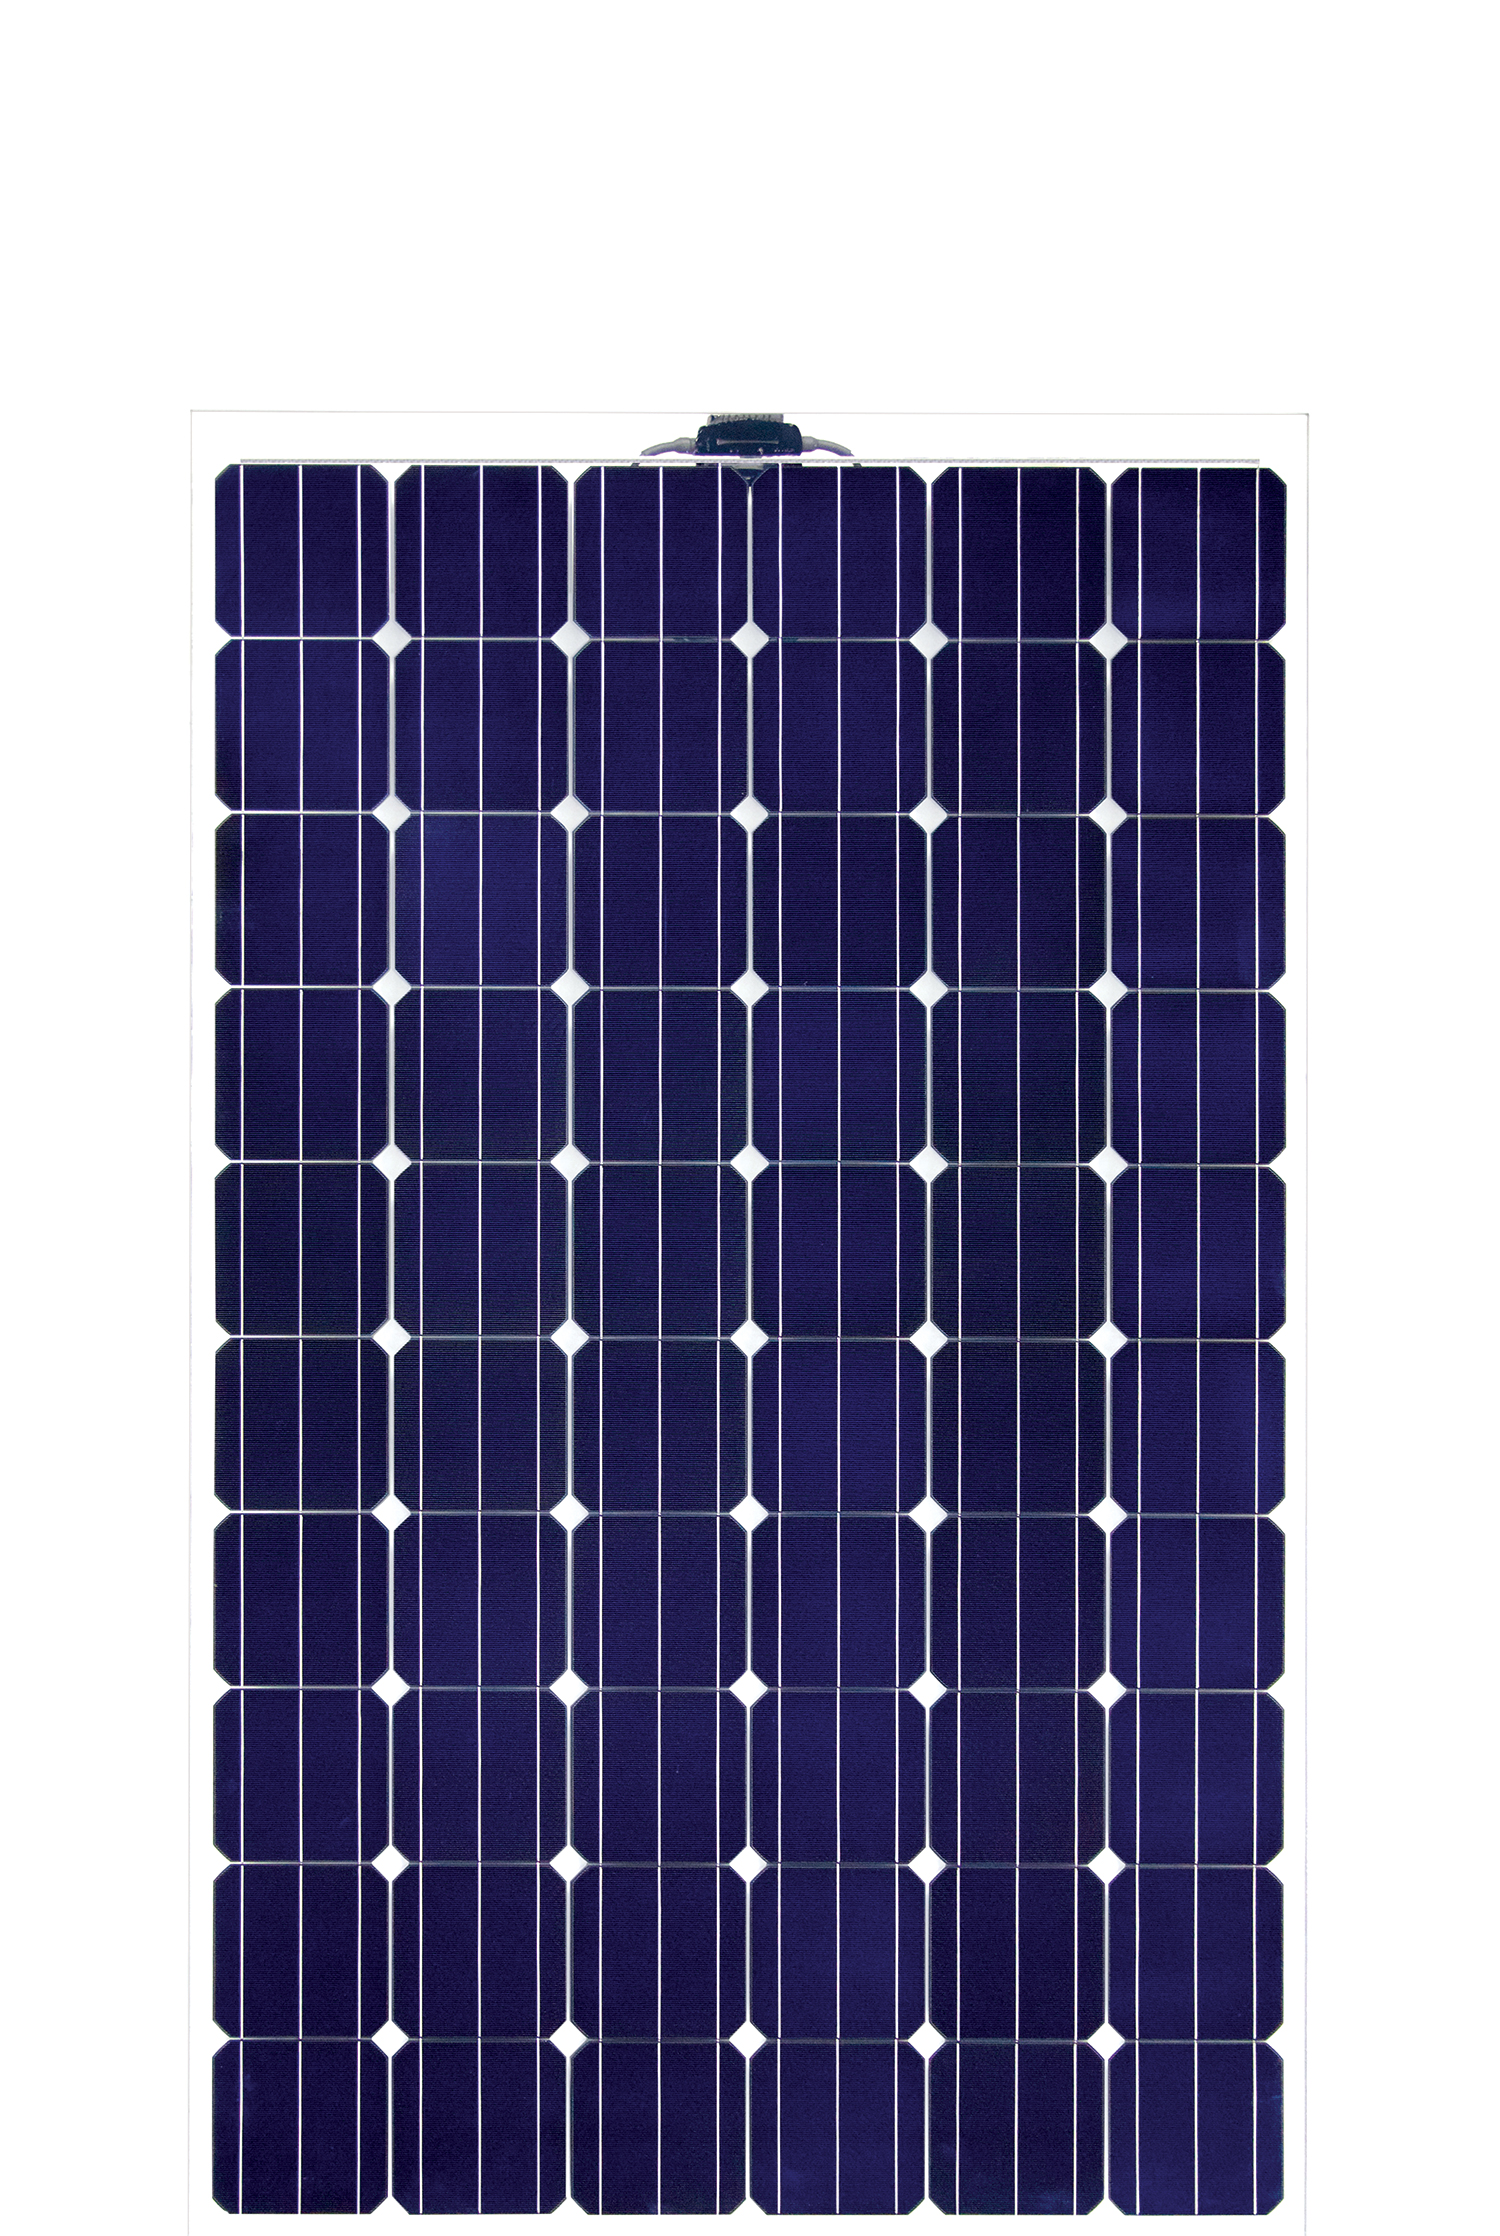 Sunpreme MAXIMA GXB 330 solar panel